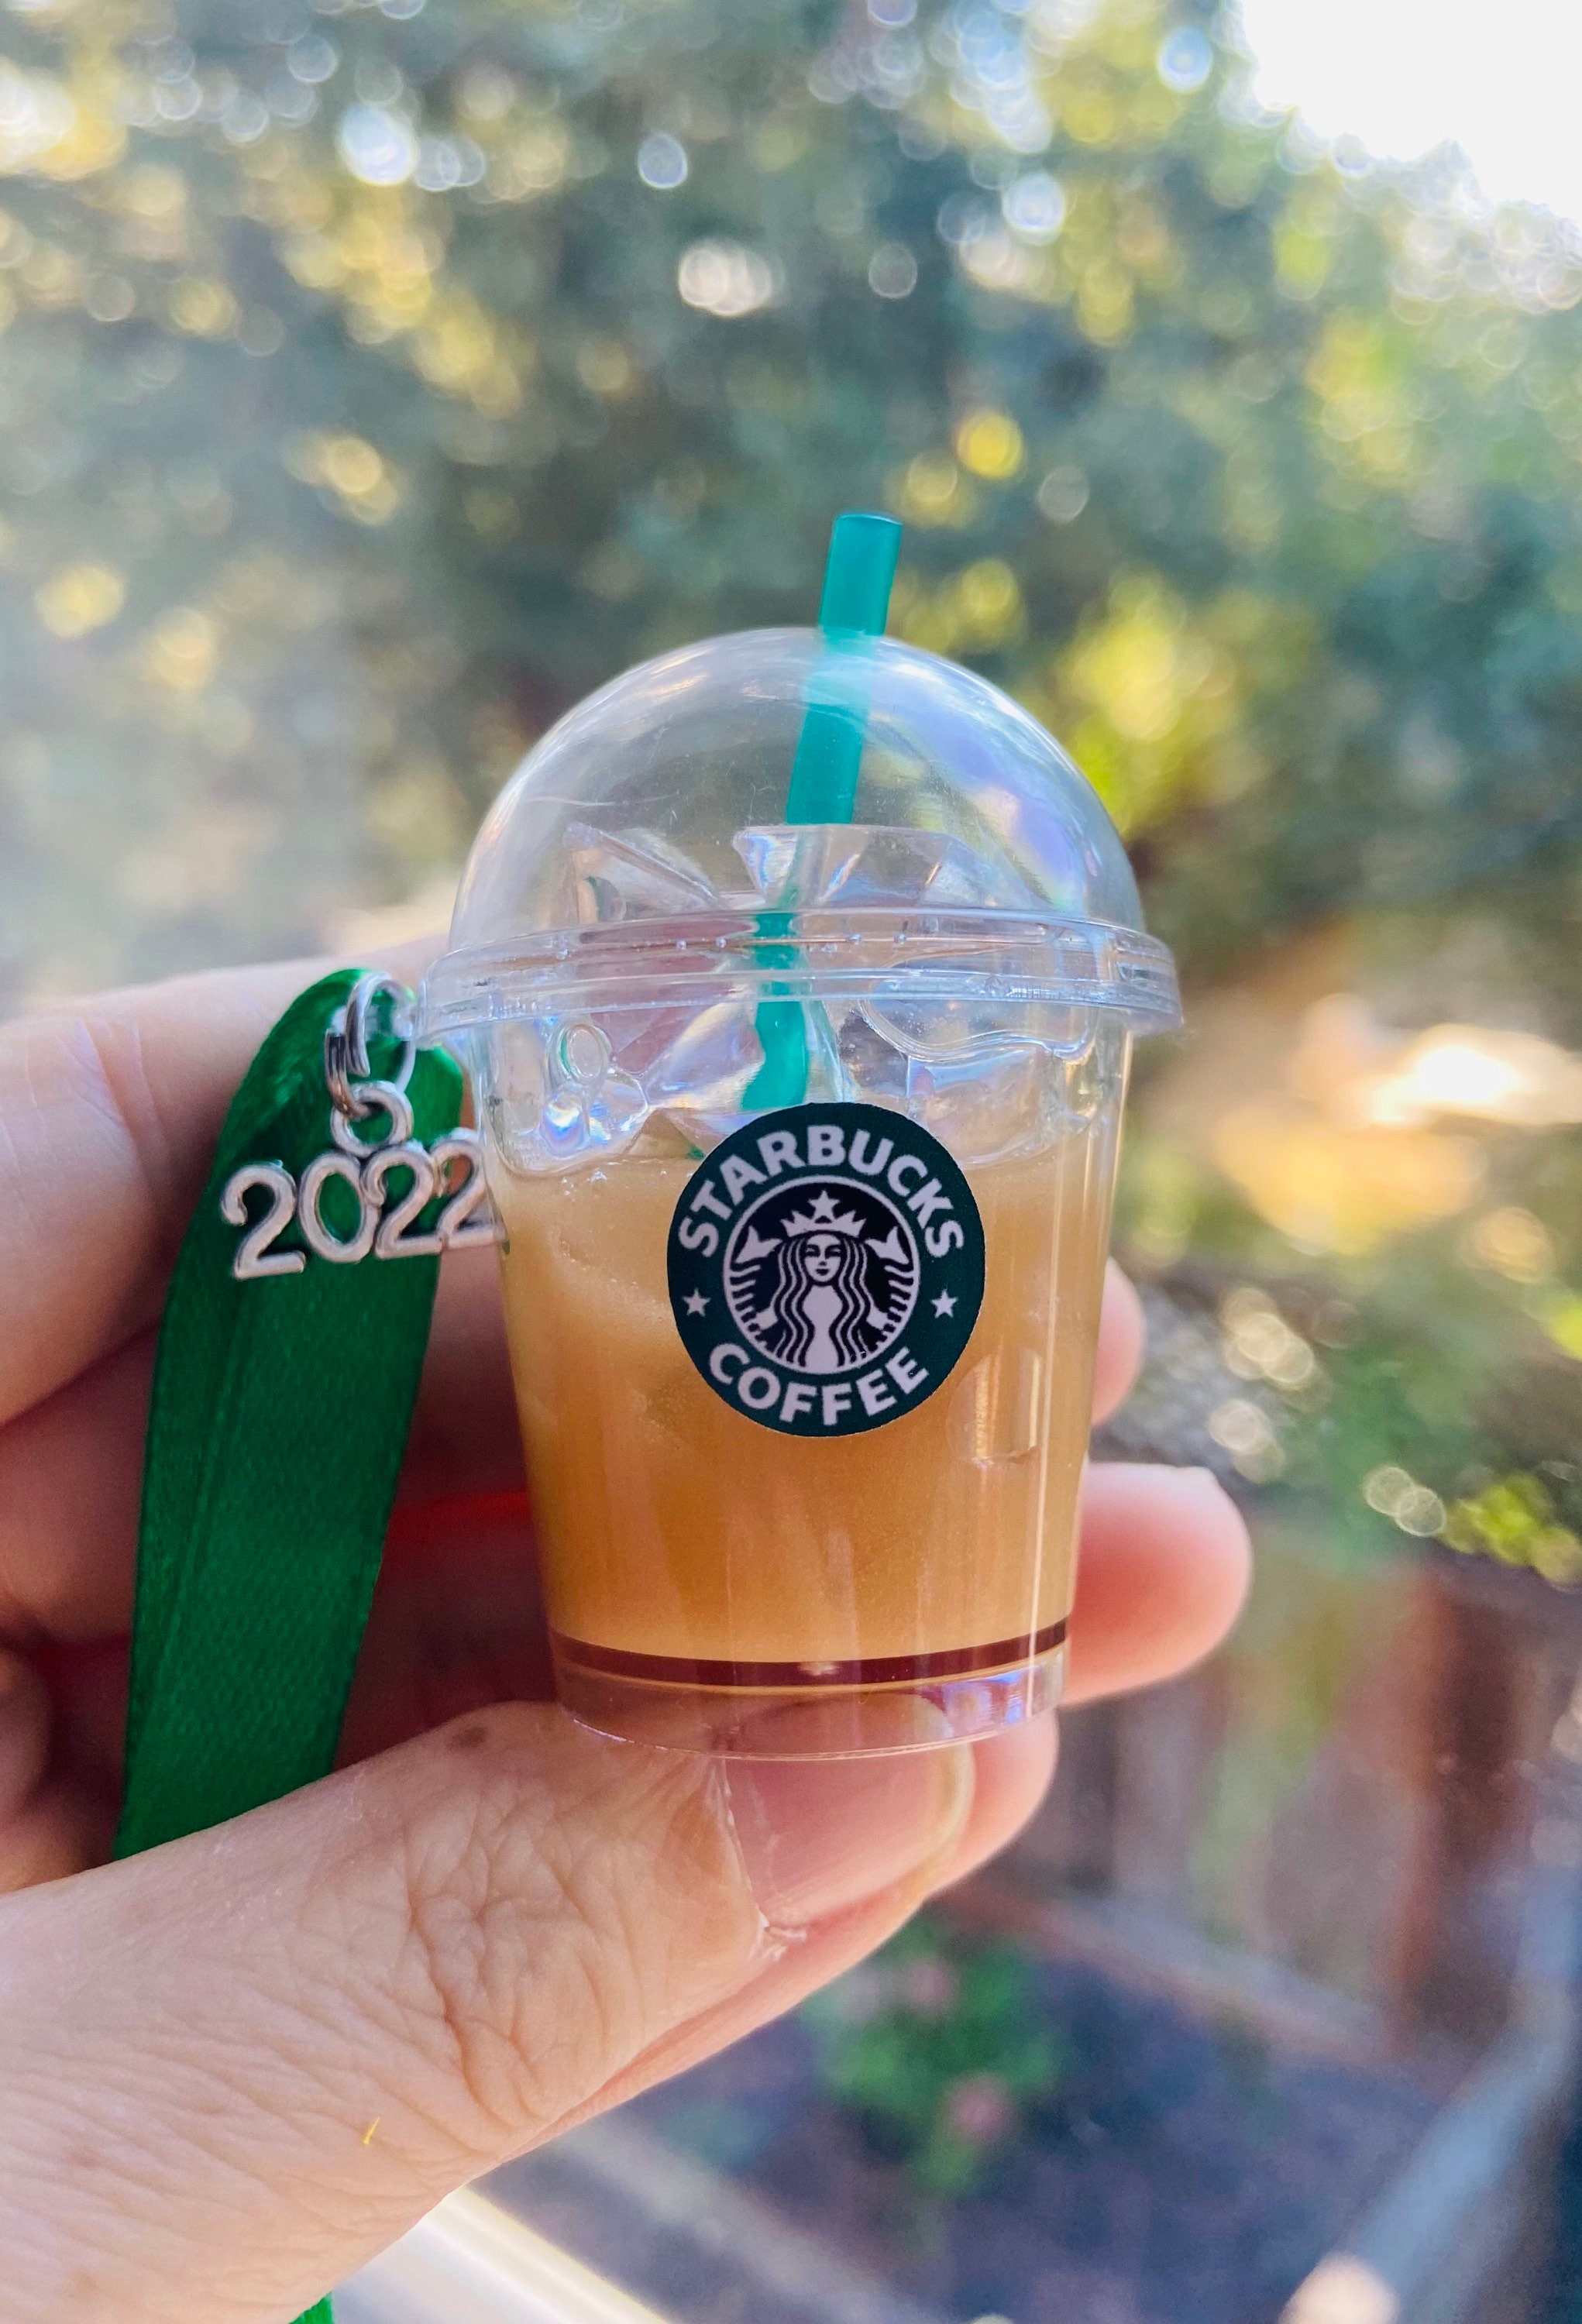 Jeweled Starbucks Iced Coffee Latte Cup Ornament 